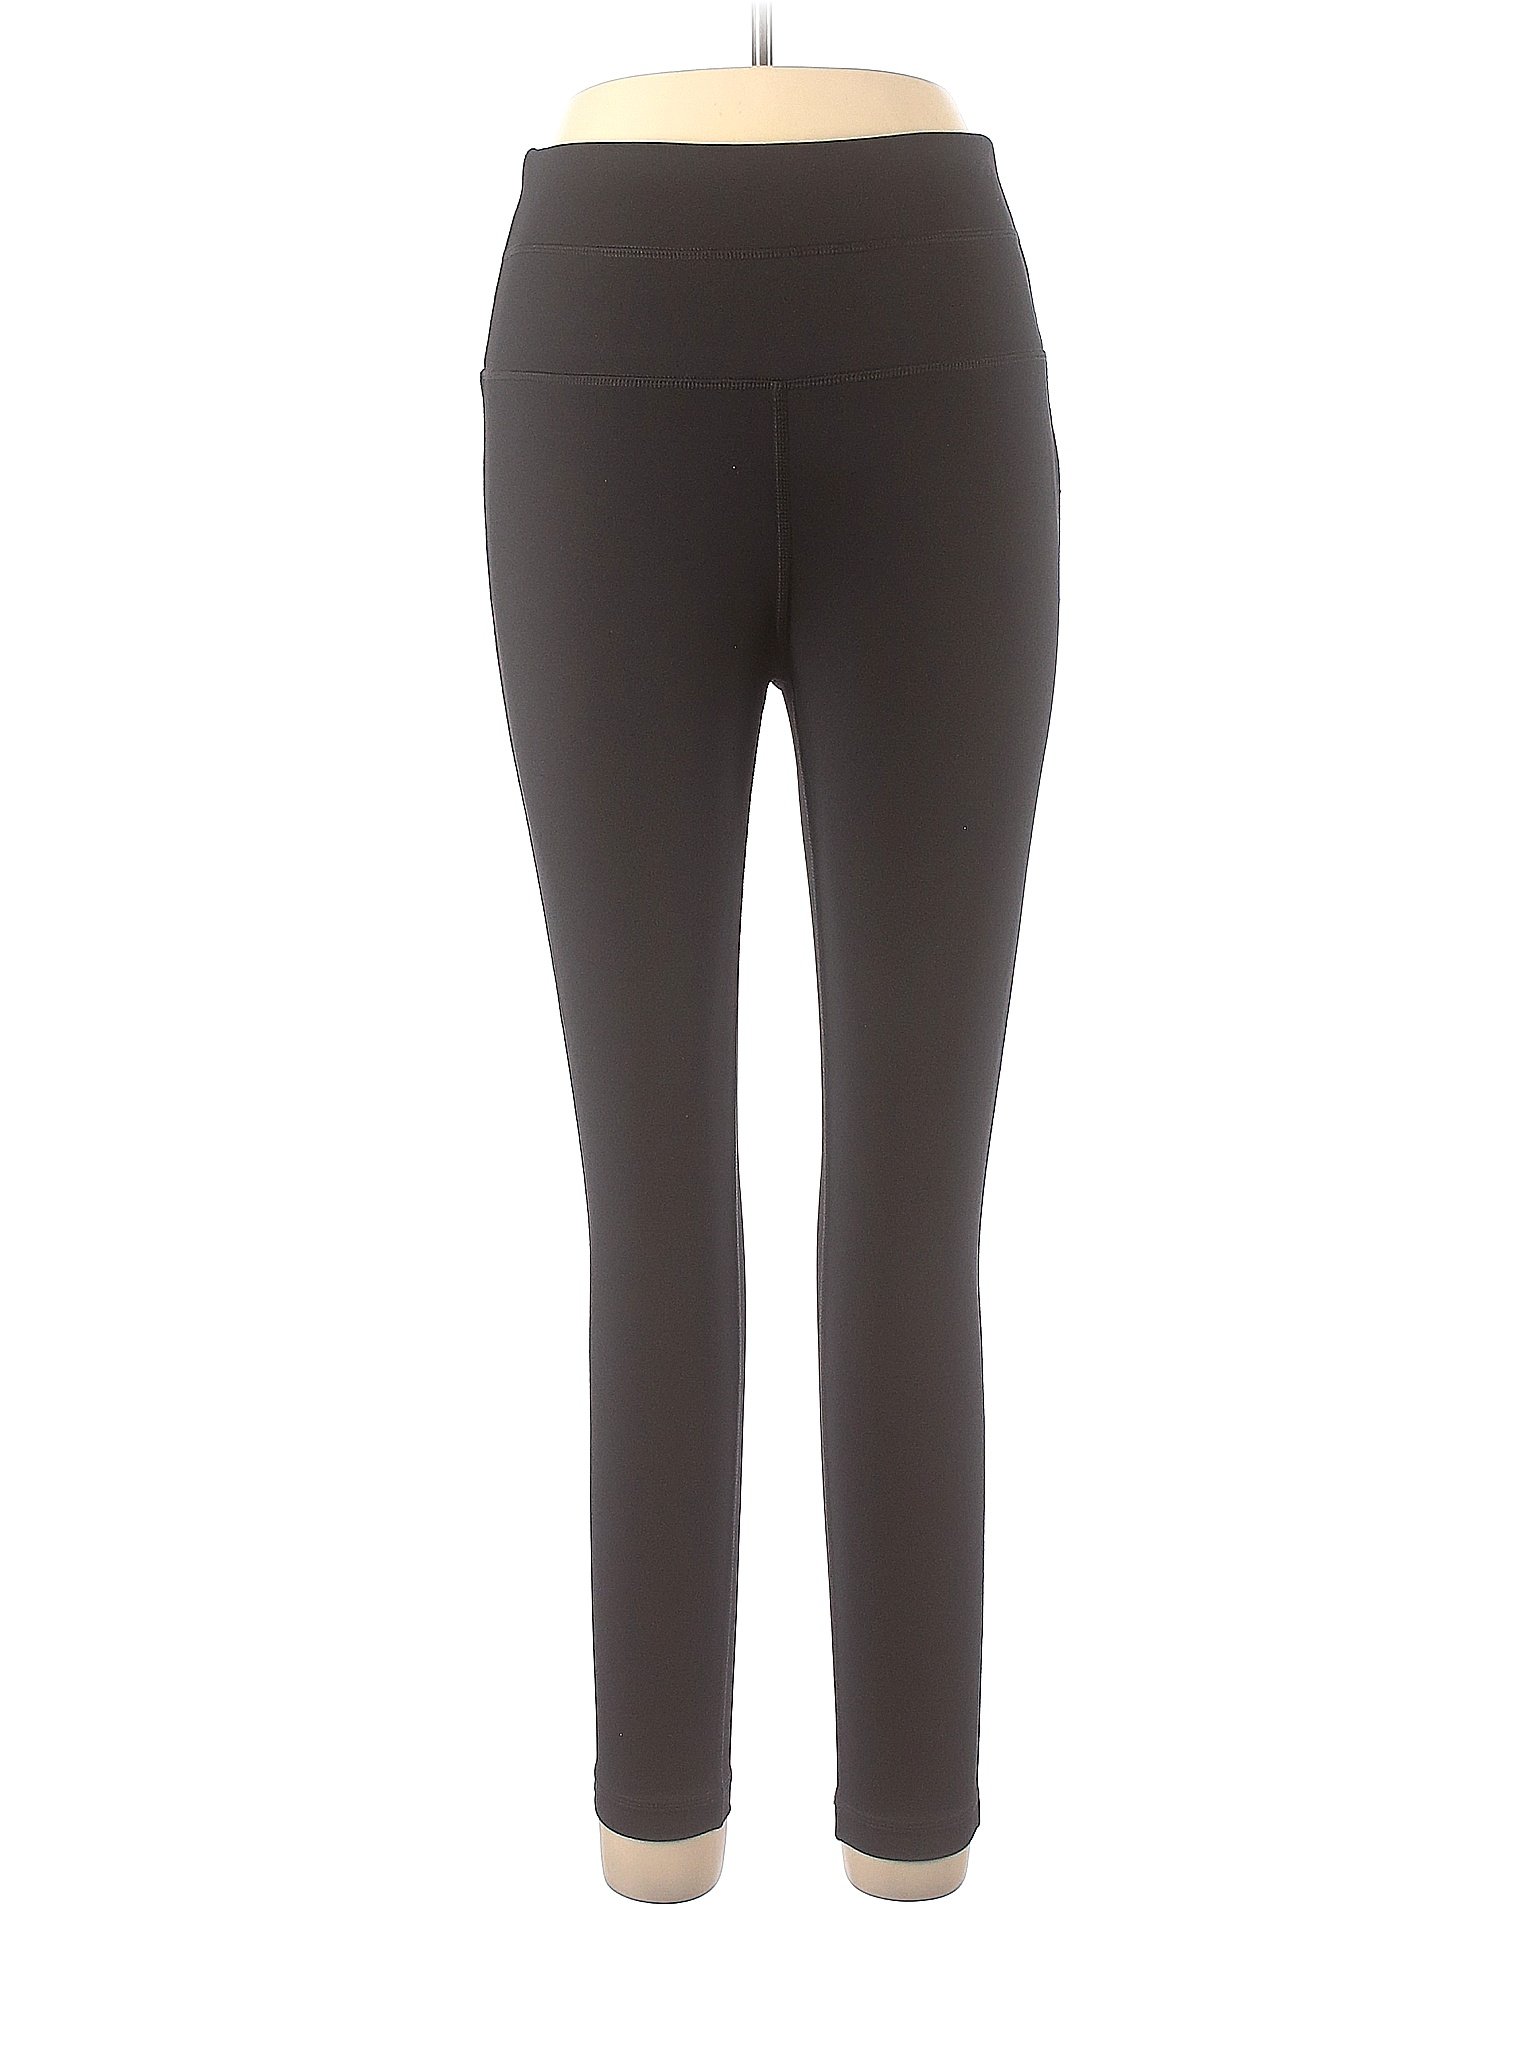 Zelos Women Black Active Pants L | eBay